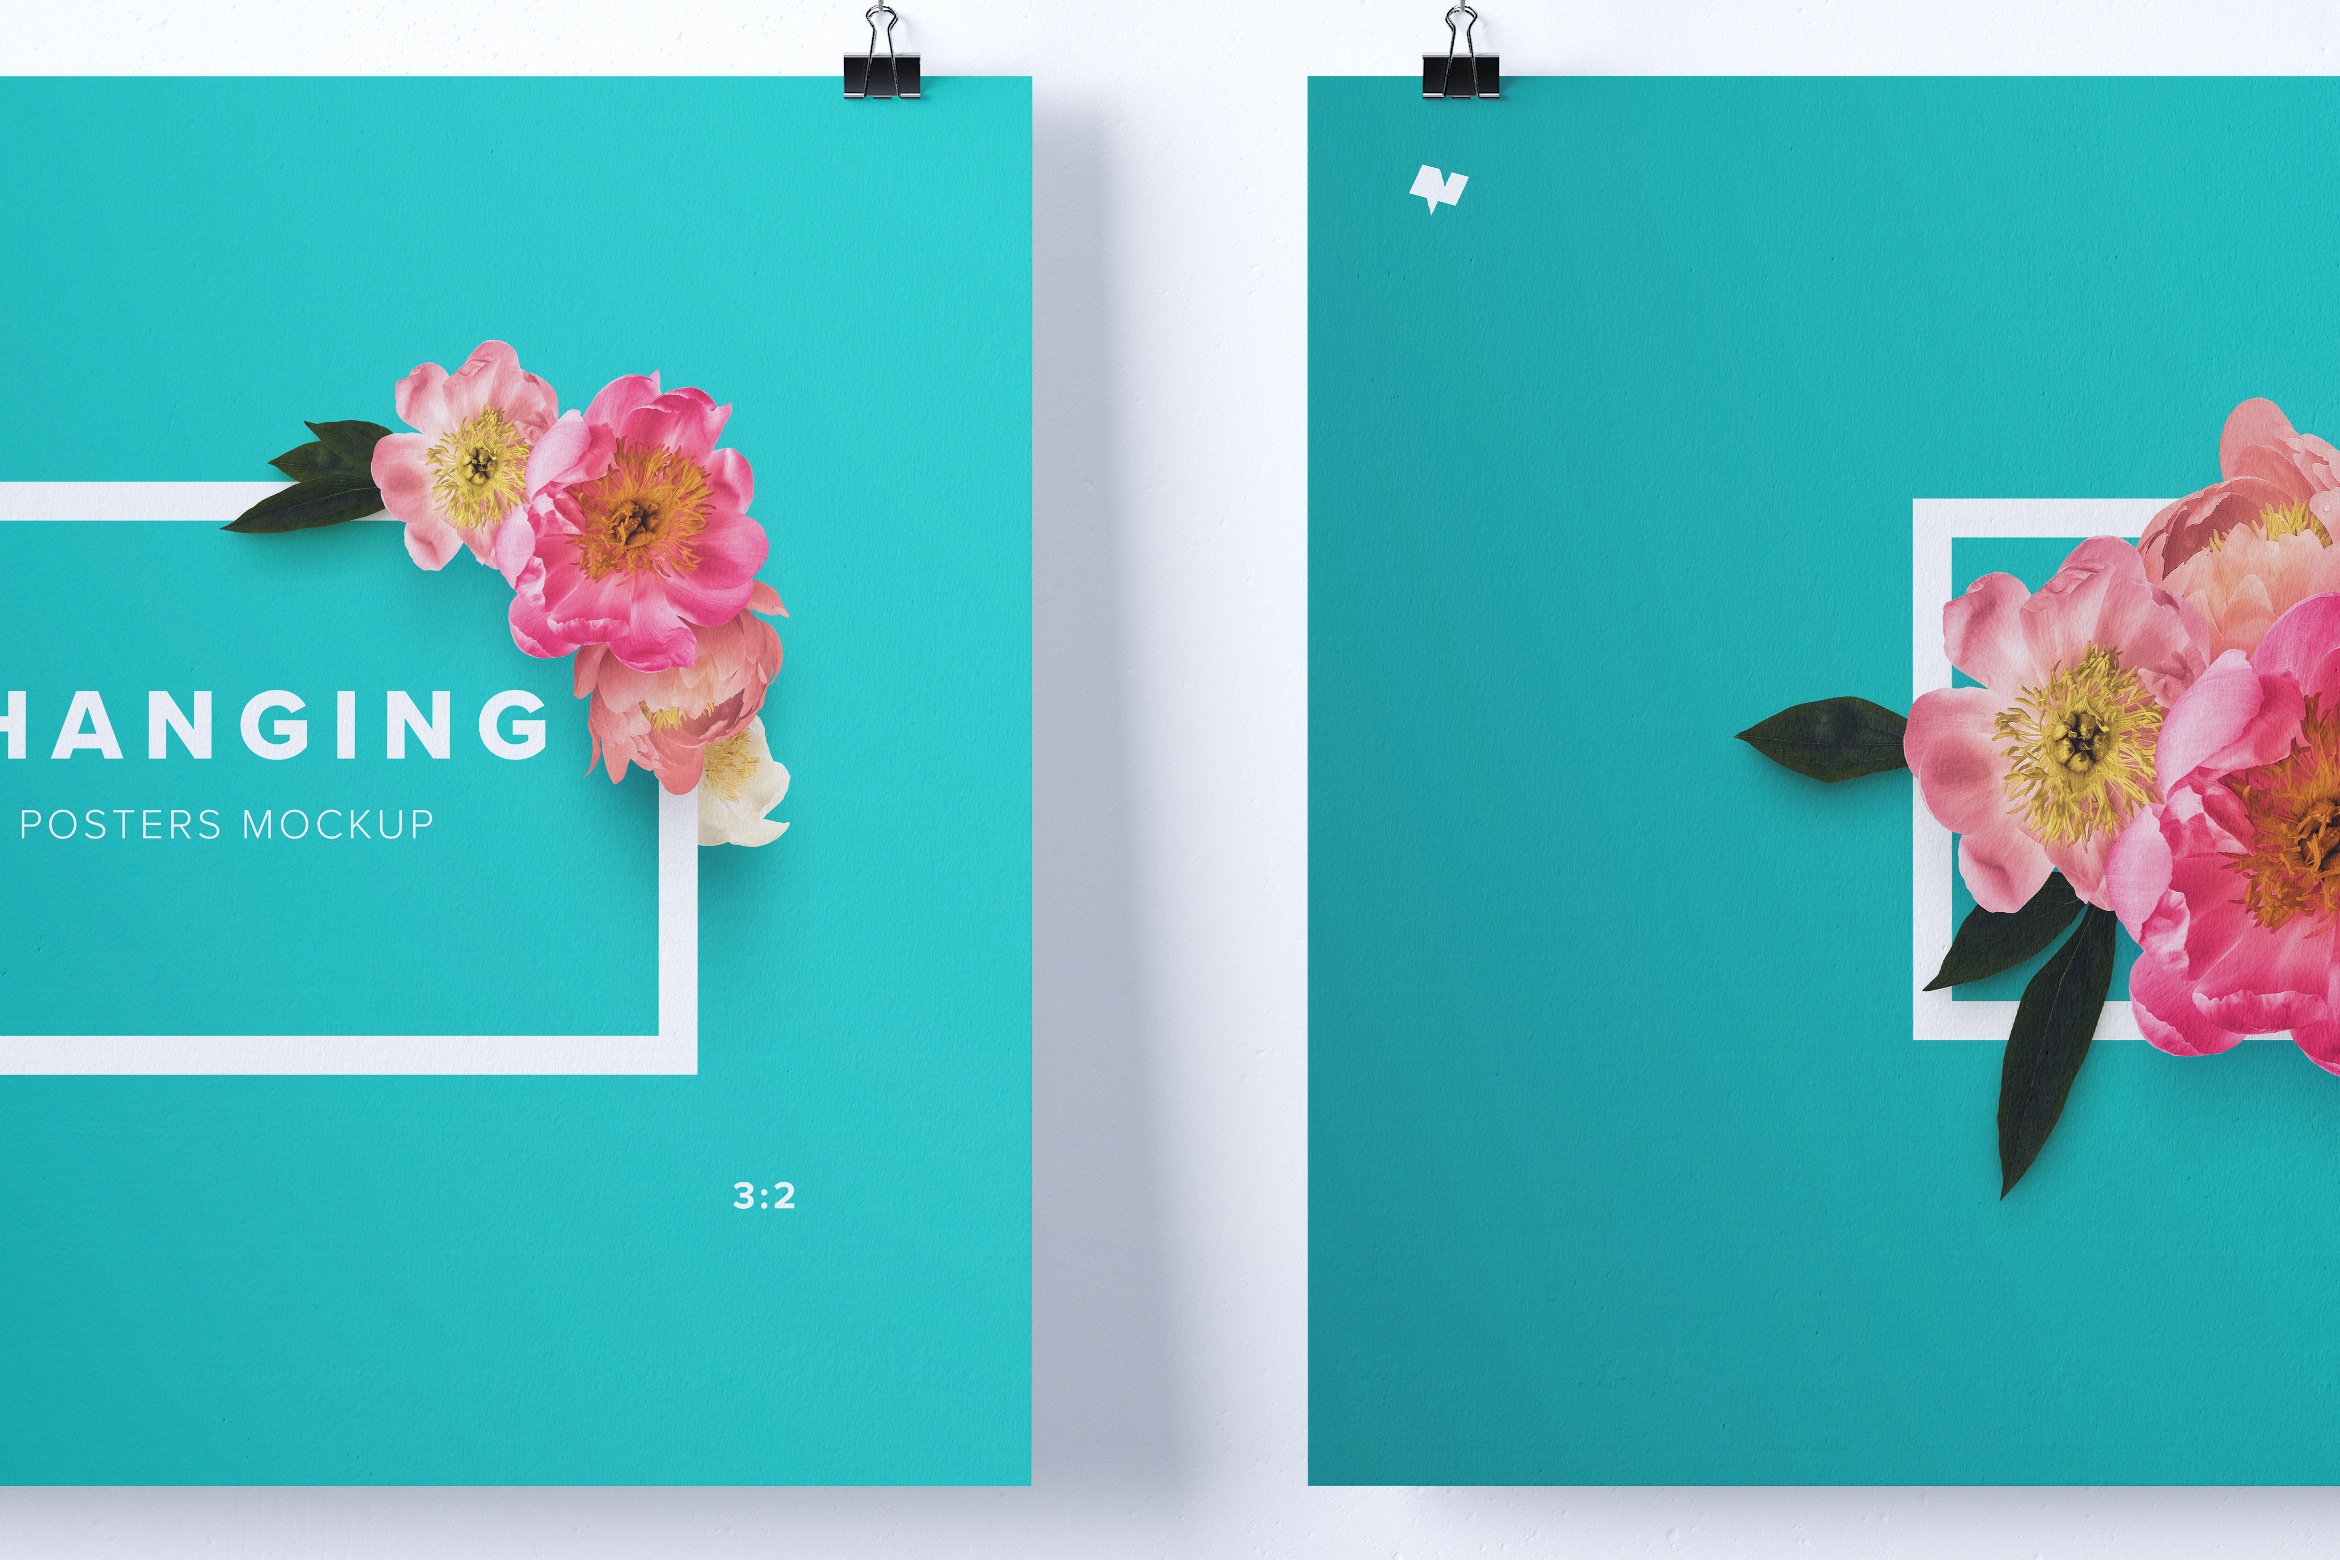 Twins悬挂海报设计效果图画框样机模板素材 Two 3:2 landscape hanging posters mockup插图(1)